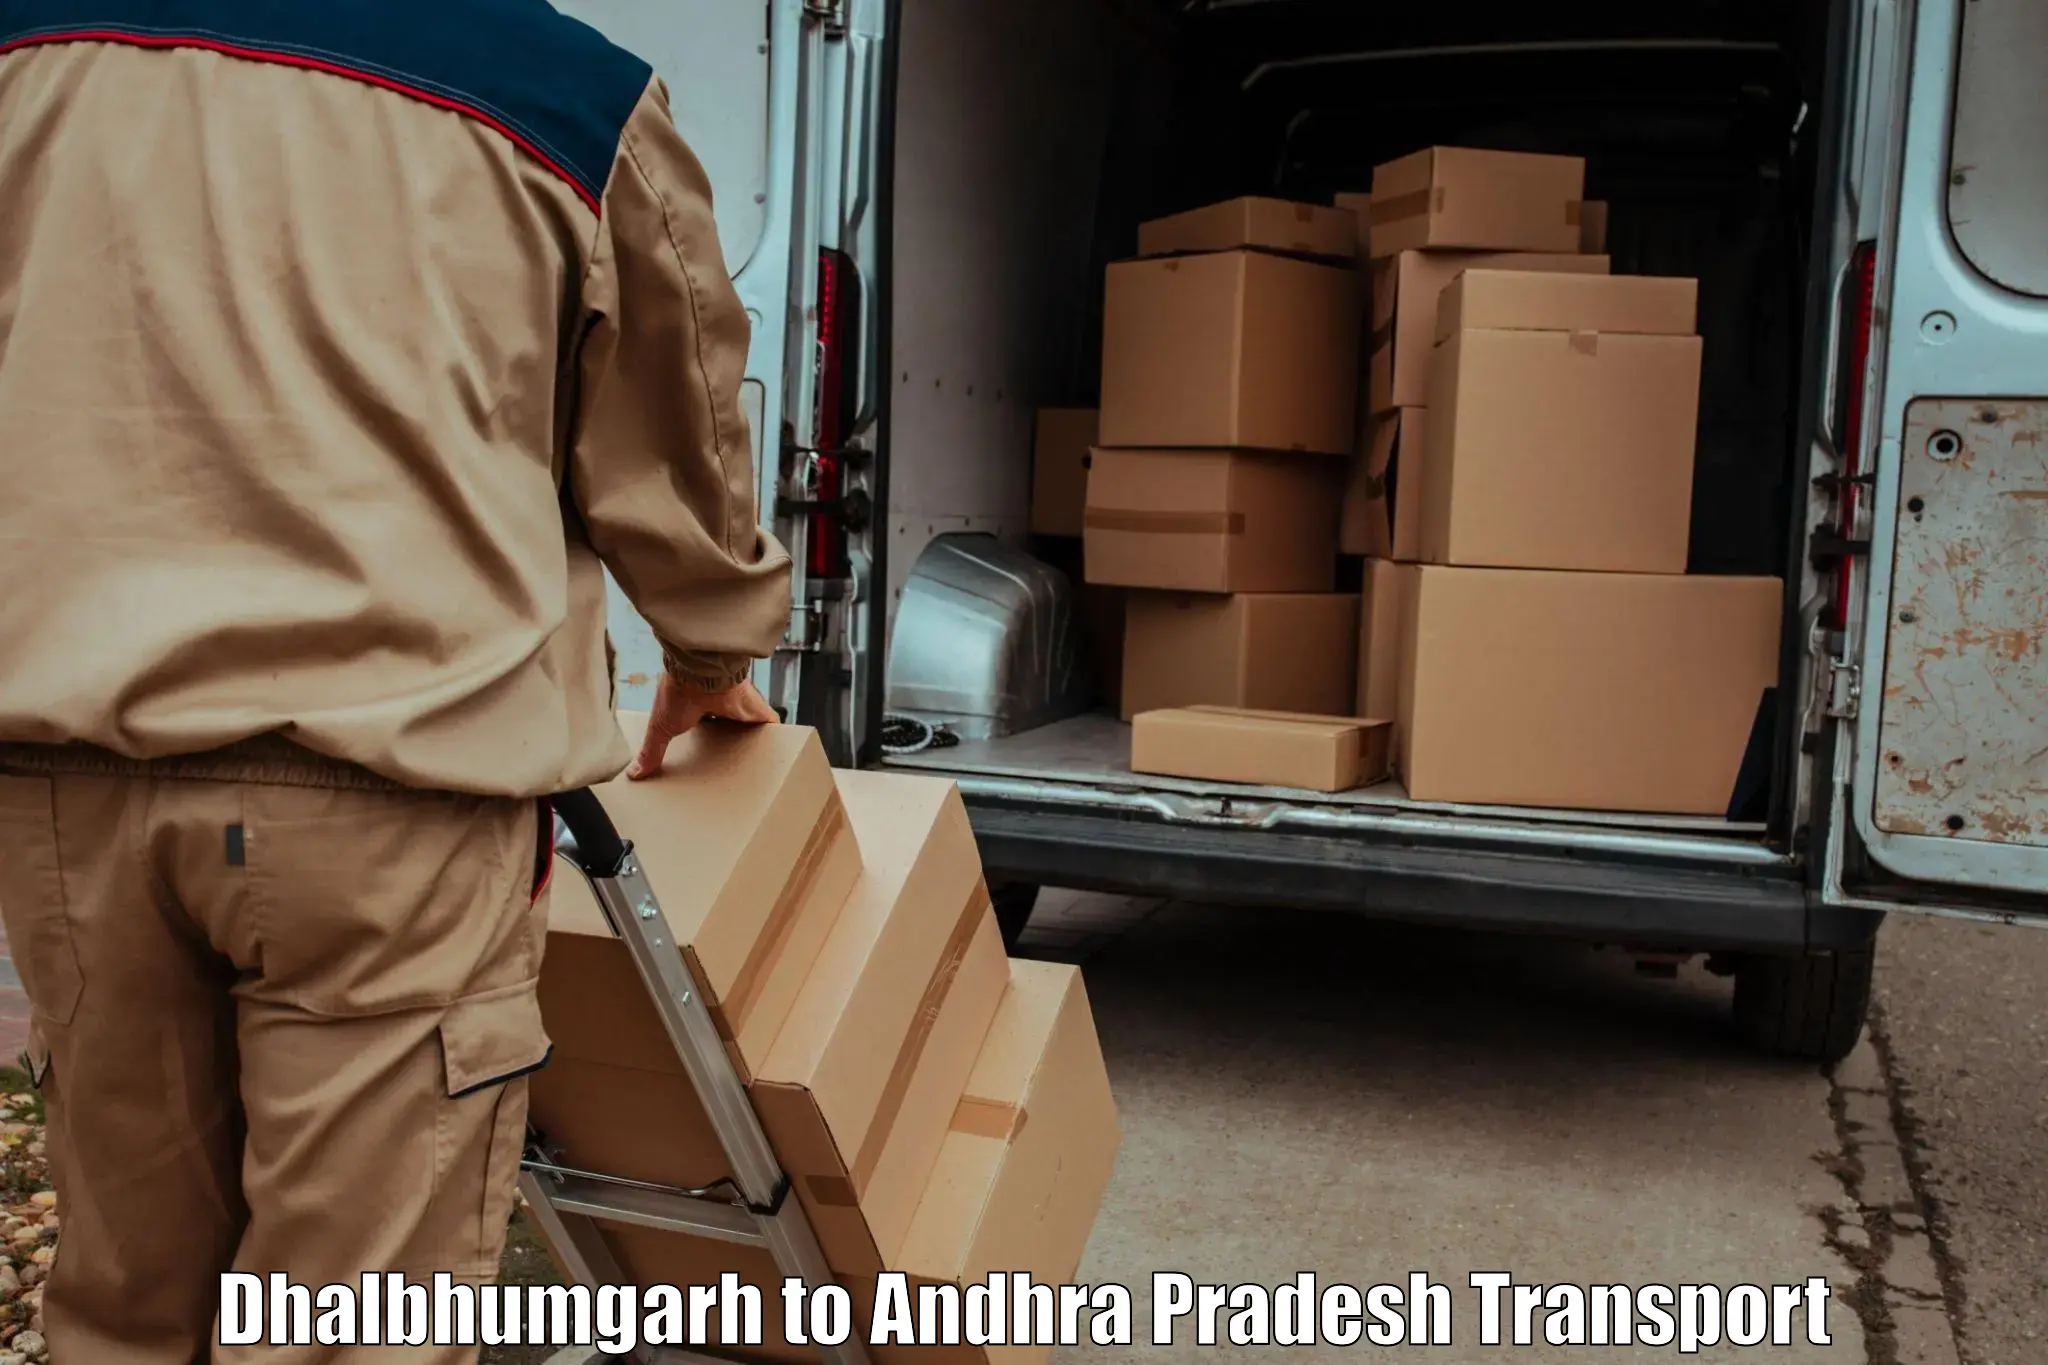 Cargo train transport services in Dhalbhumgarh to Andhra Pradesh